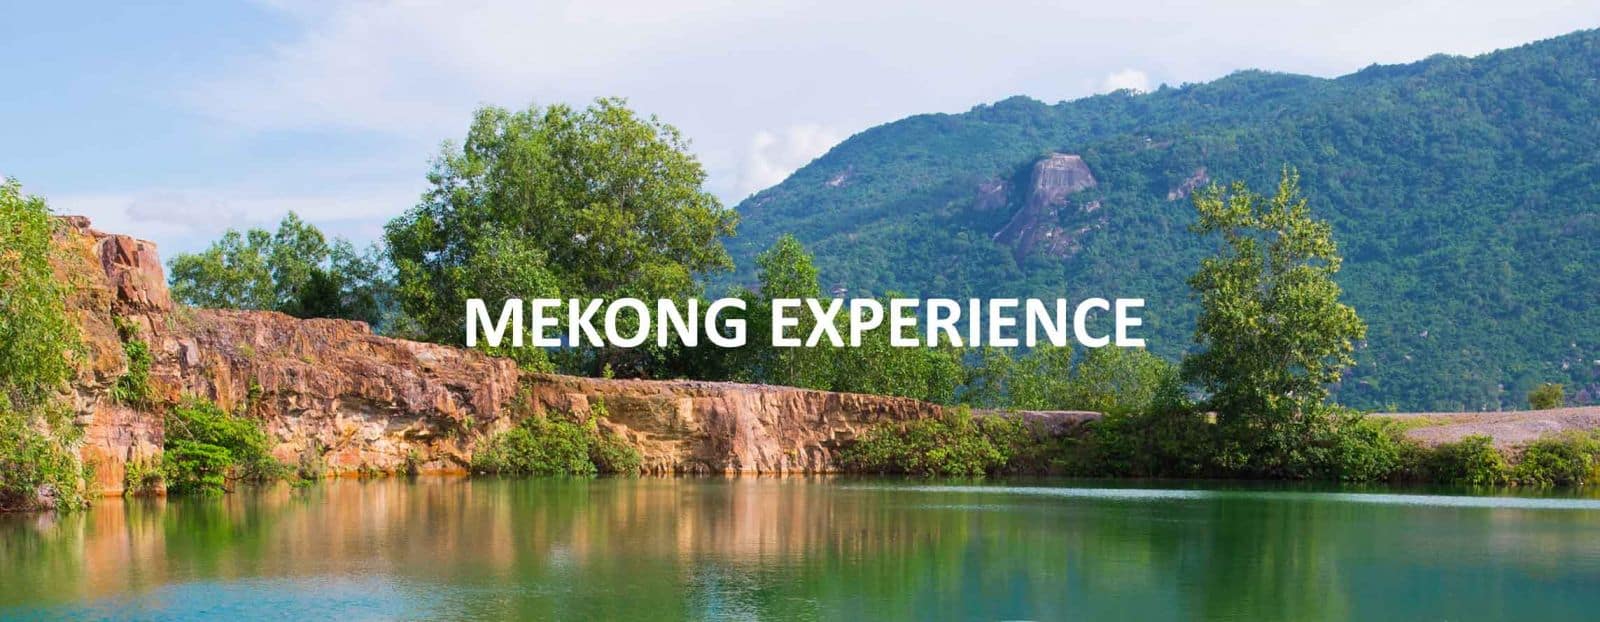 Mekong Experience Travel | Can Tho Tours, Mekong Eco Tours